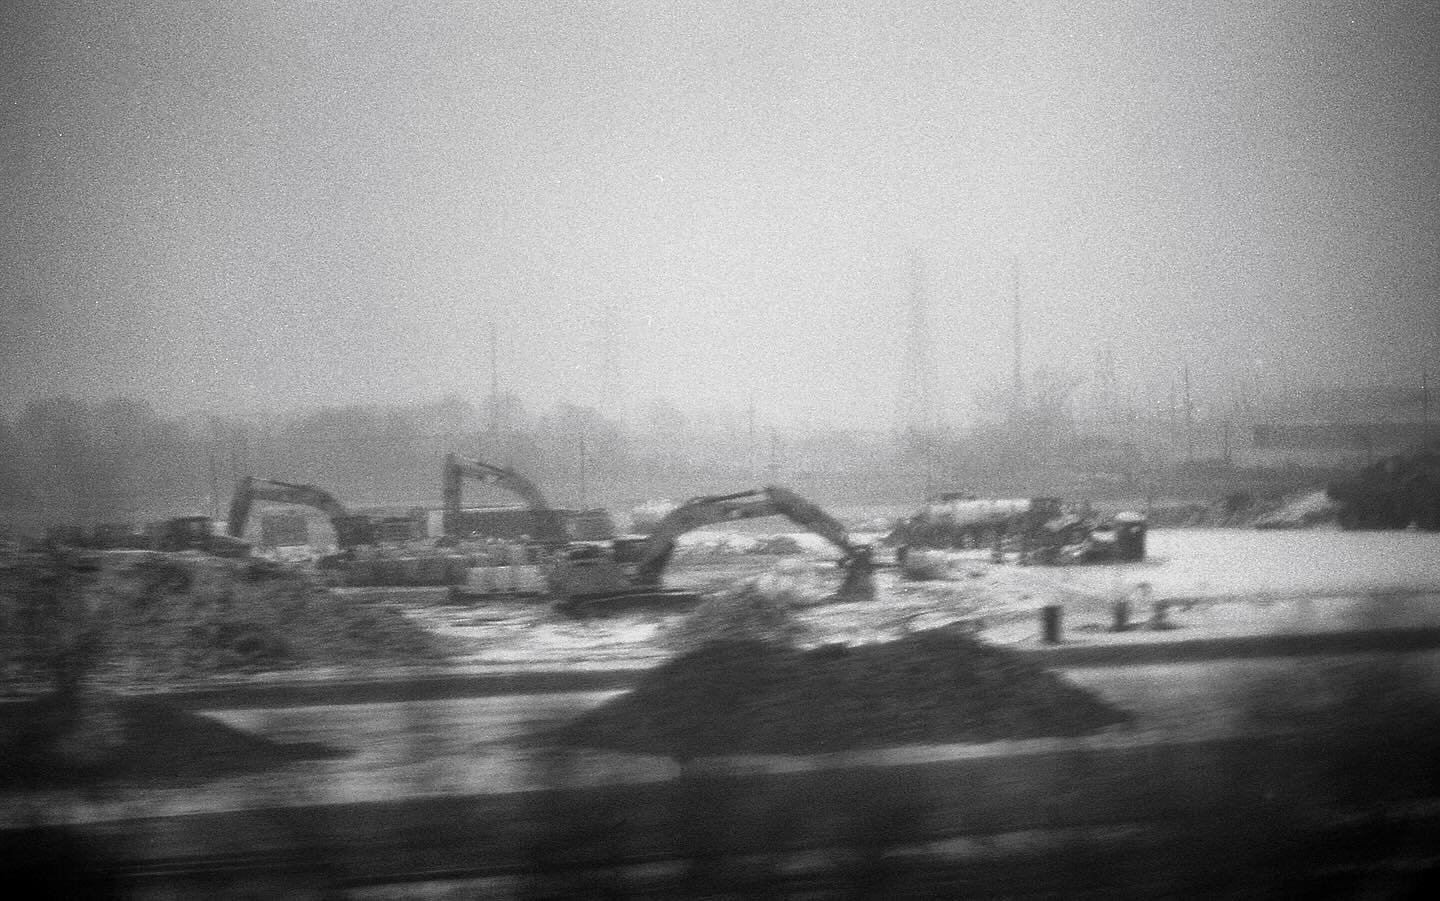 2023.12 // Outside Newark, USA
.
.
.
.
.
#film #filmphotography #analog #analogphotography #analogpeople #analogvibes #minolta #minoltagang #35mm #35mmphotography #latergram